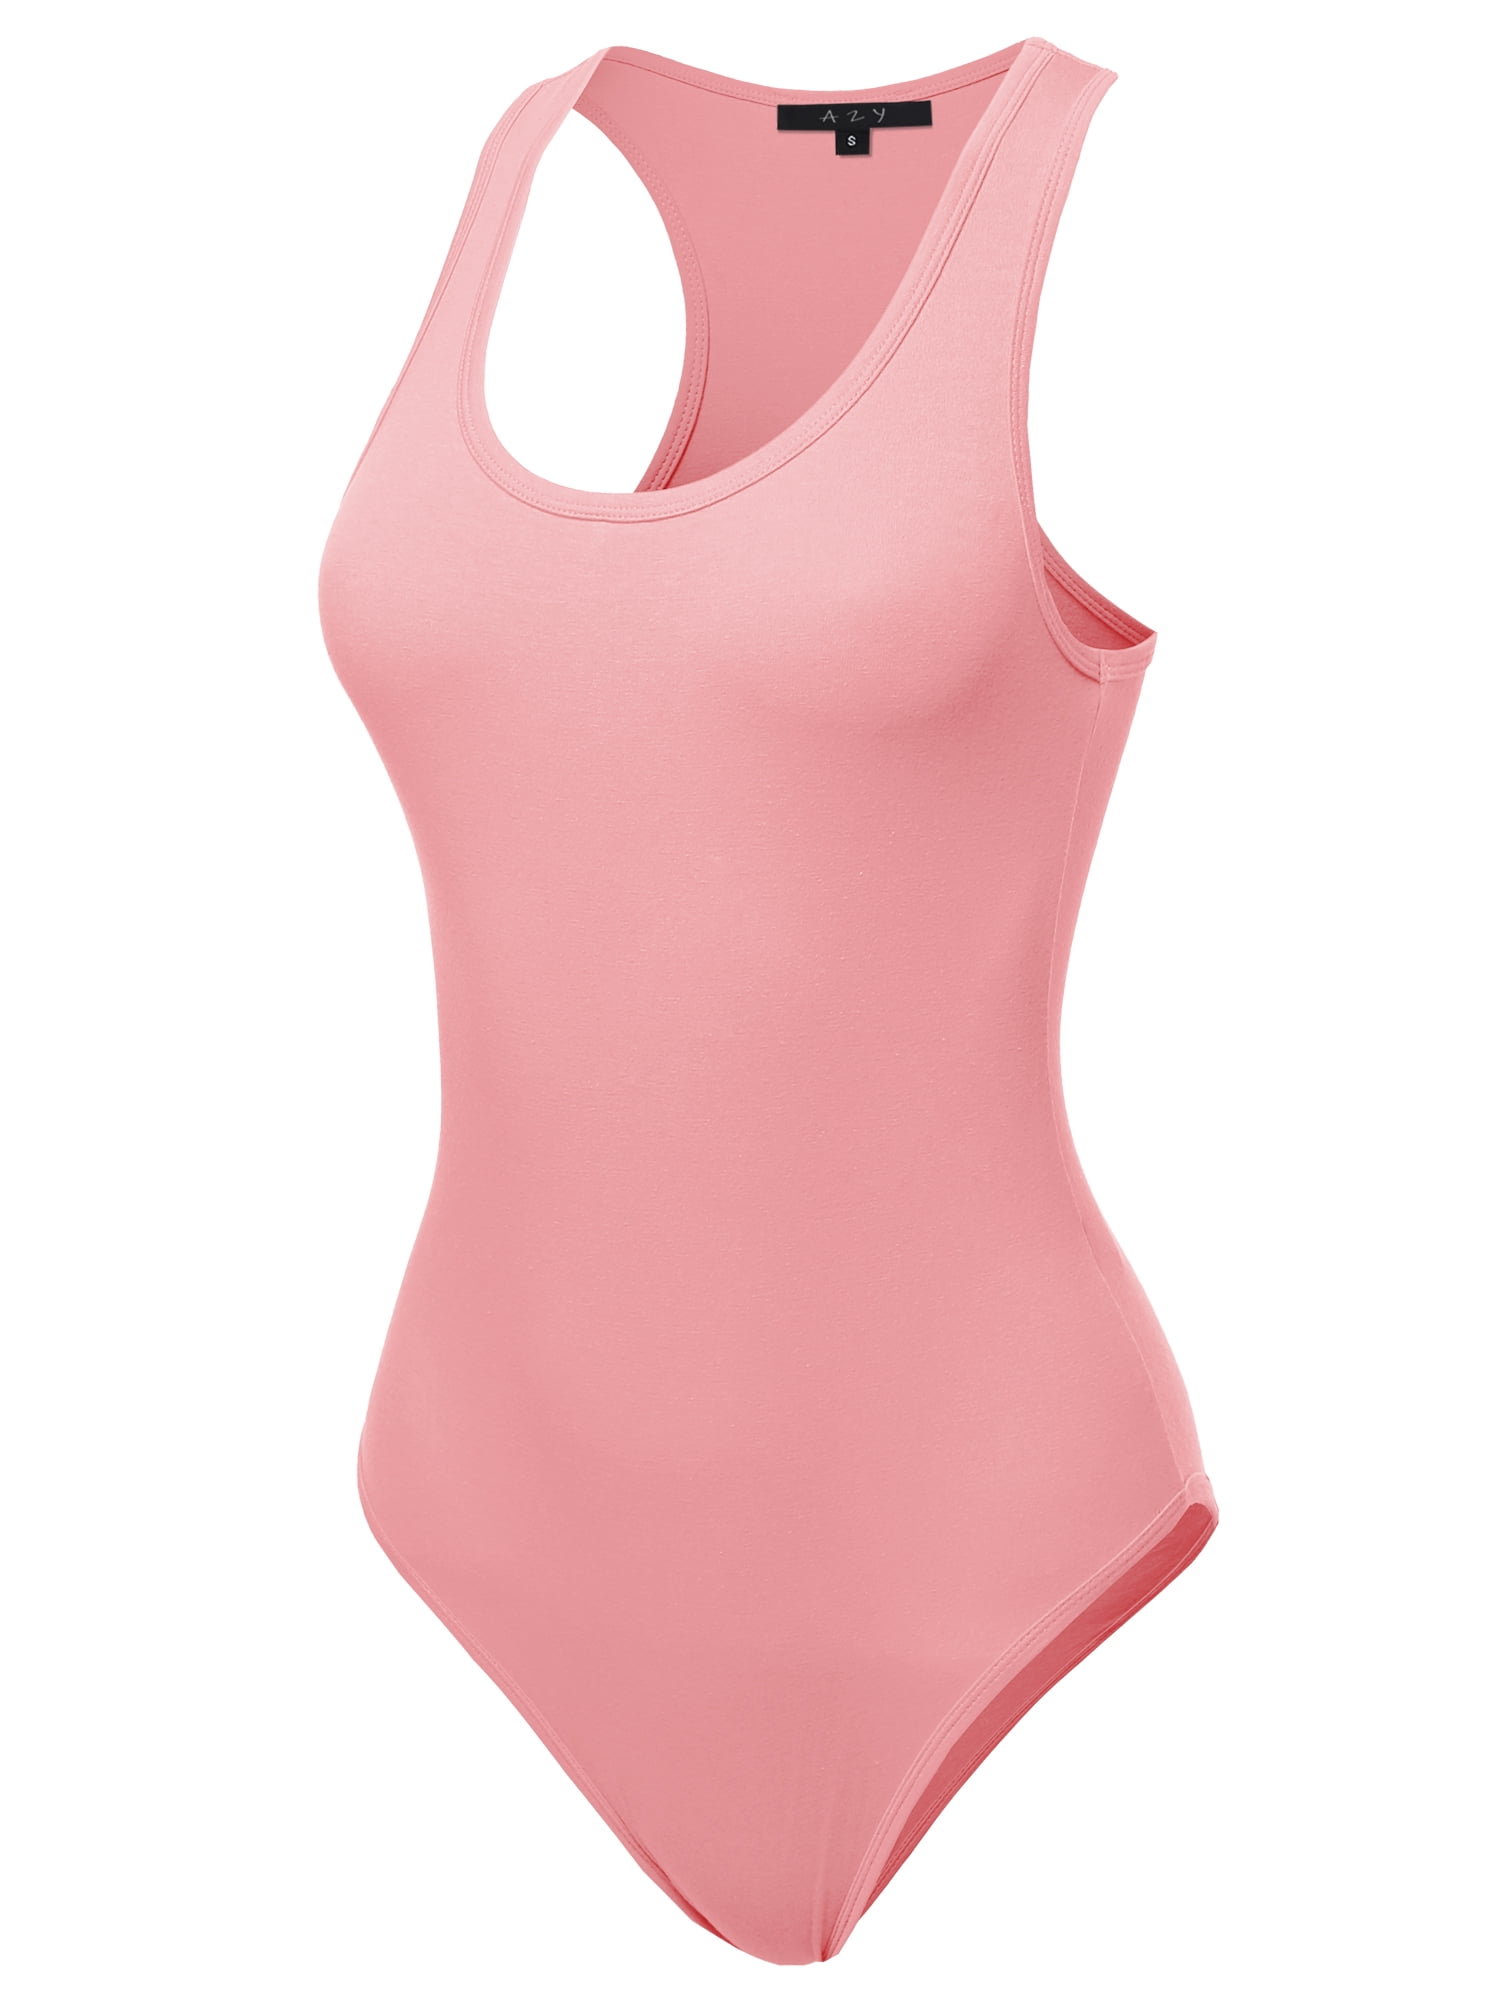 A2Y Women's Fashion Basic Premium Cotton Racerback Tank Body Suit Dusty  Pink S 